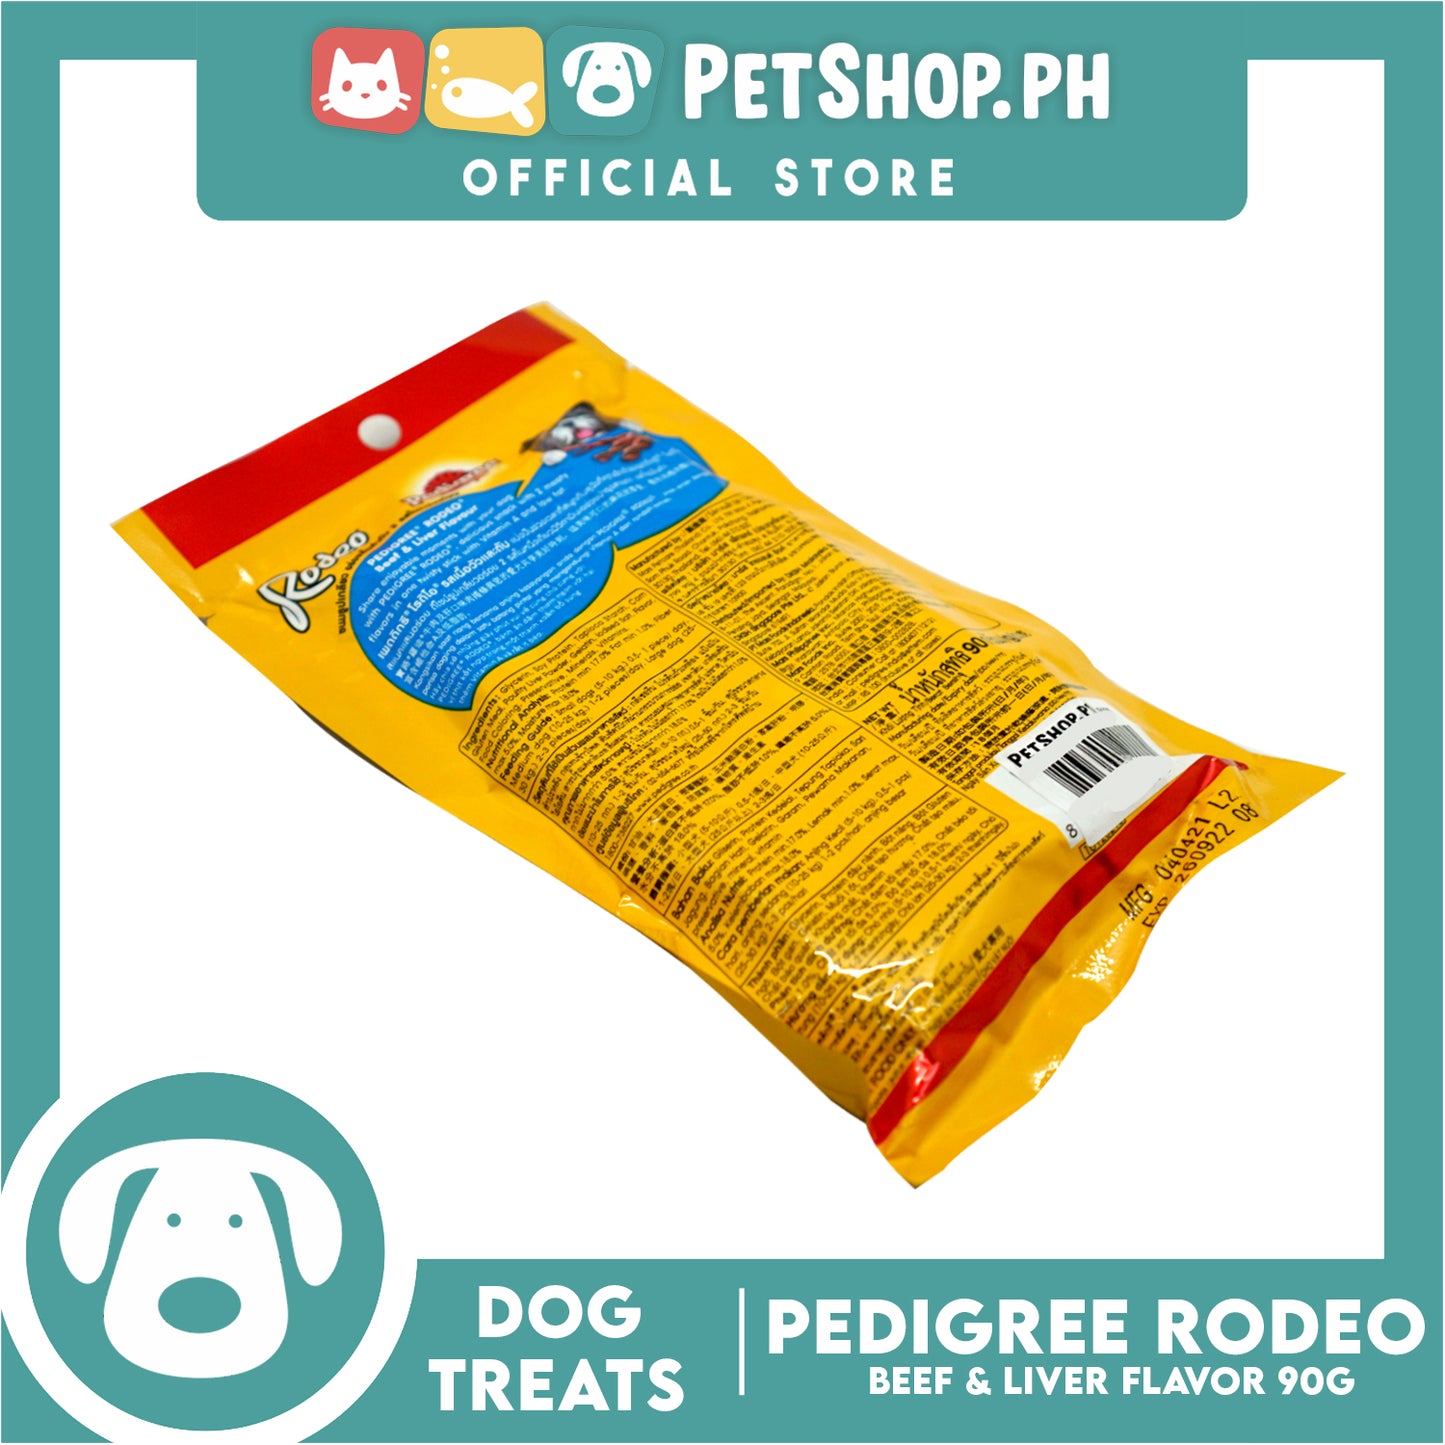 12pcs Pedigree Rodeo Beef and Liver 90g Dog Treats, Twist Stick